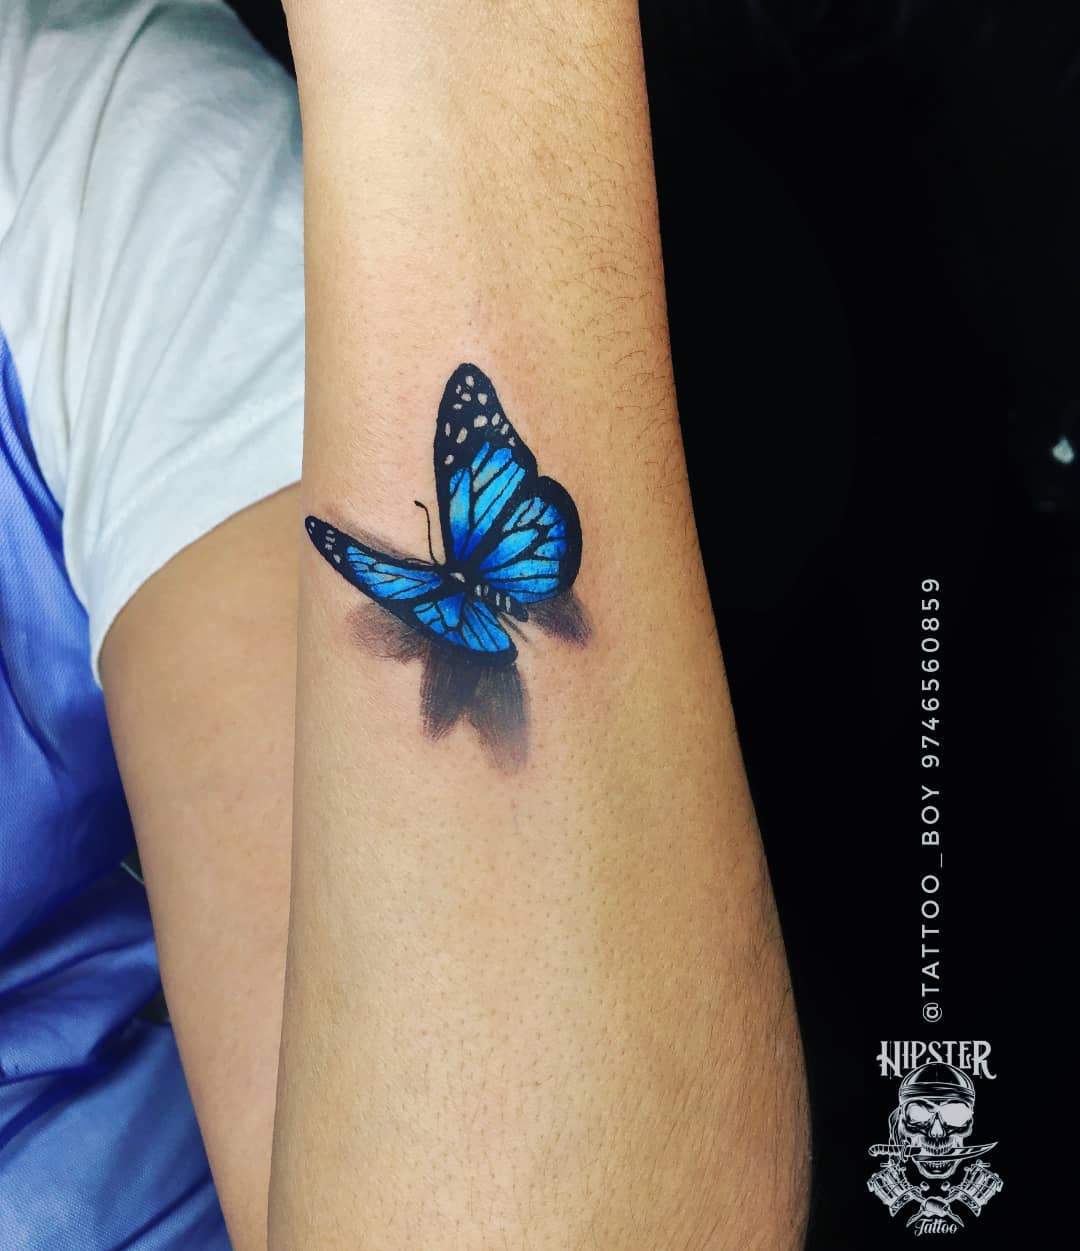 30+ Best Butterfly Tattoos Design You’ll Love To Get Next. Butterfly 3D Tattoos